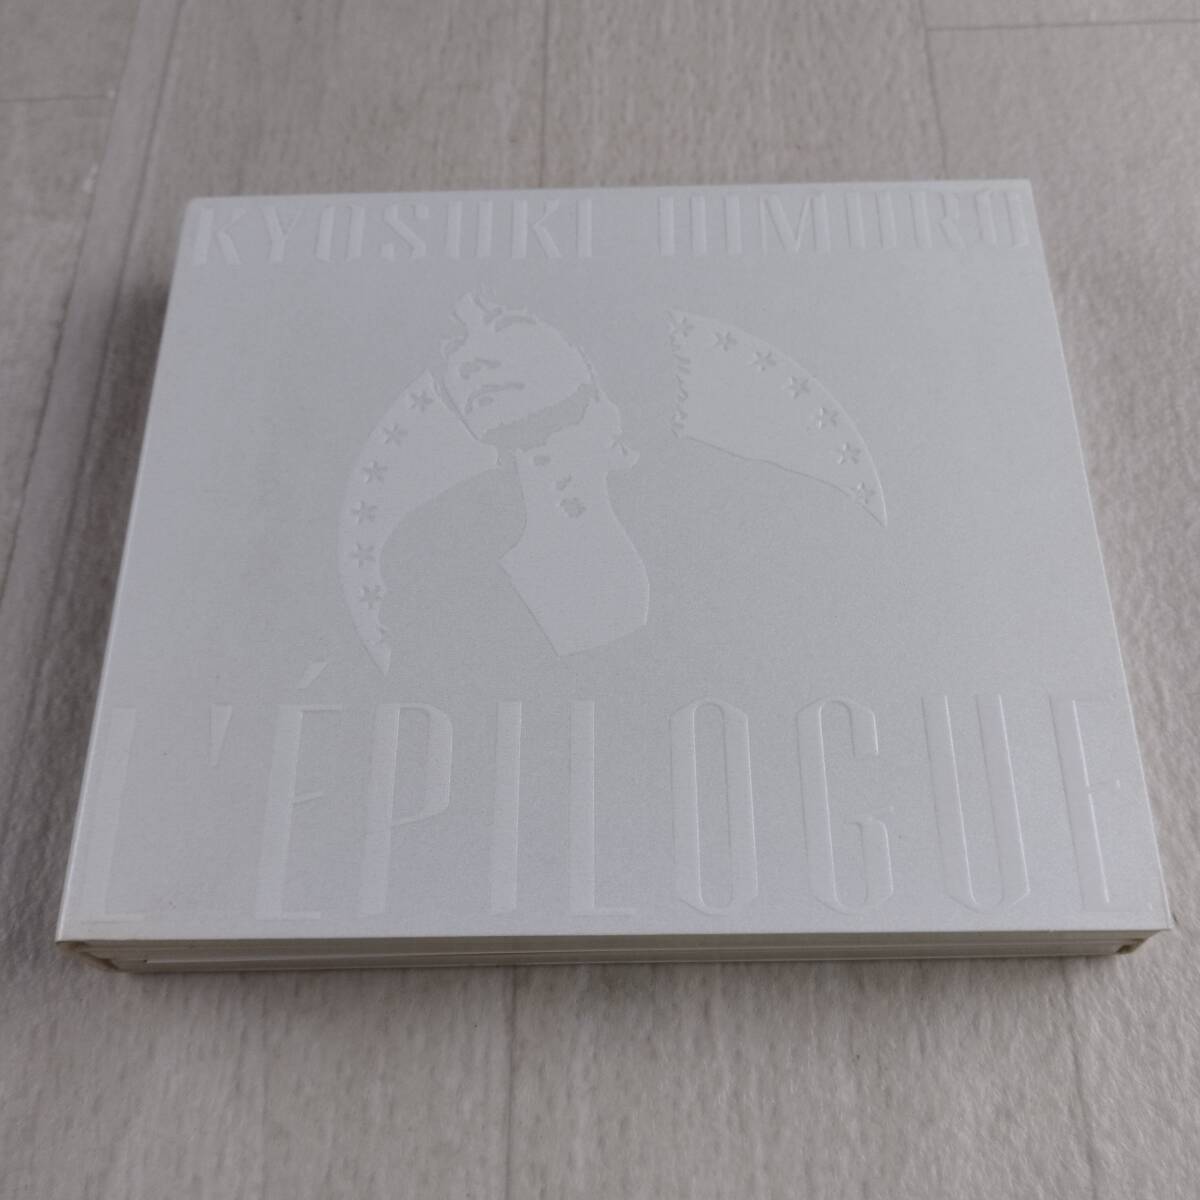 1MC3 CD 氷室京介 L’EPILOGUE 初回限定盤の画像1